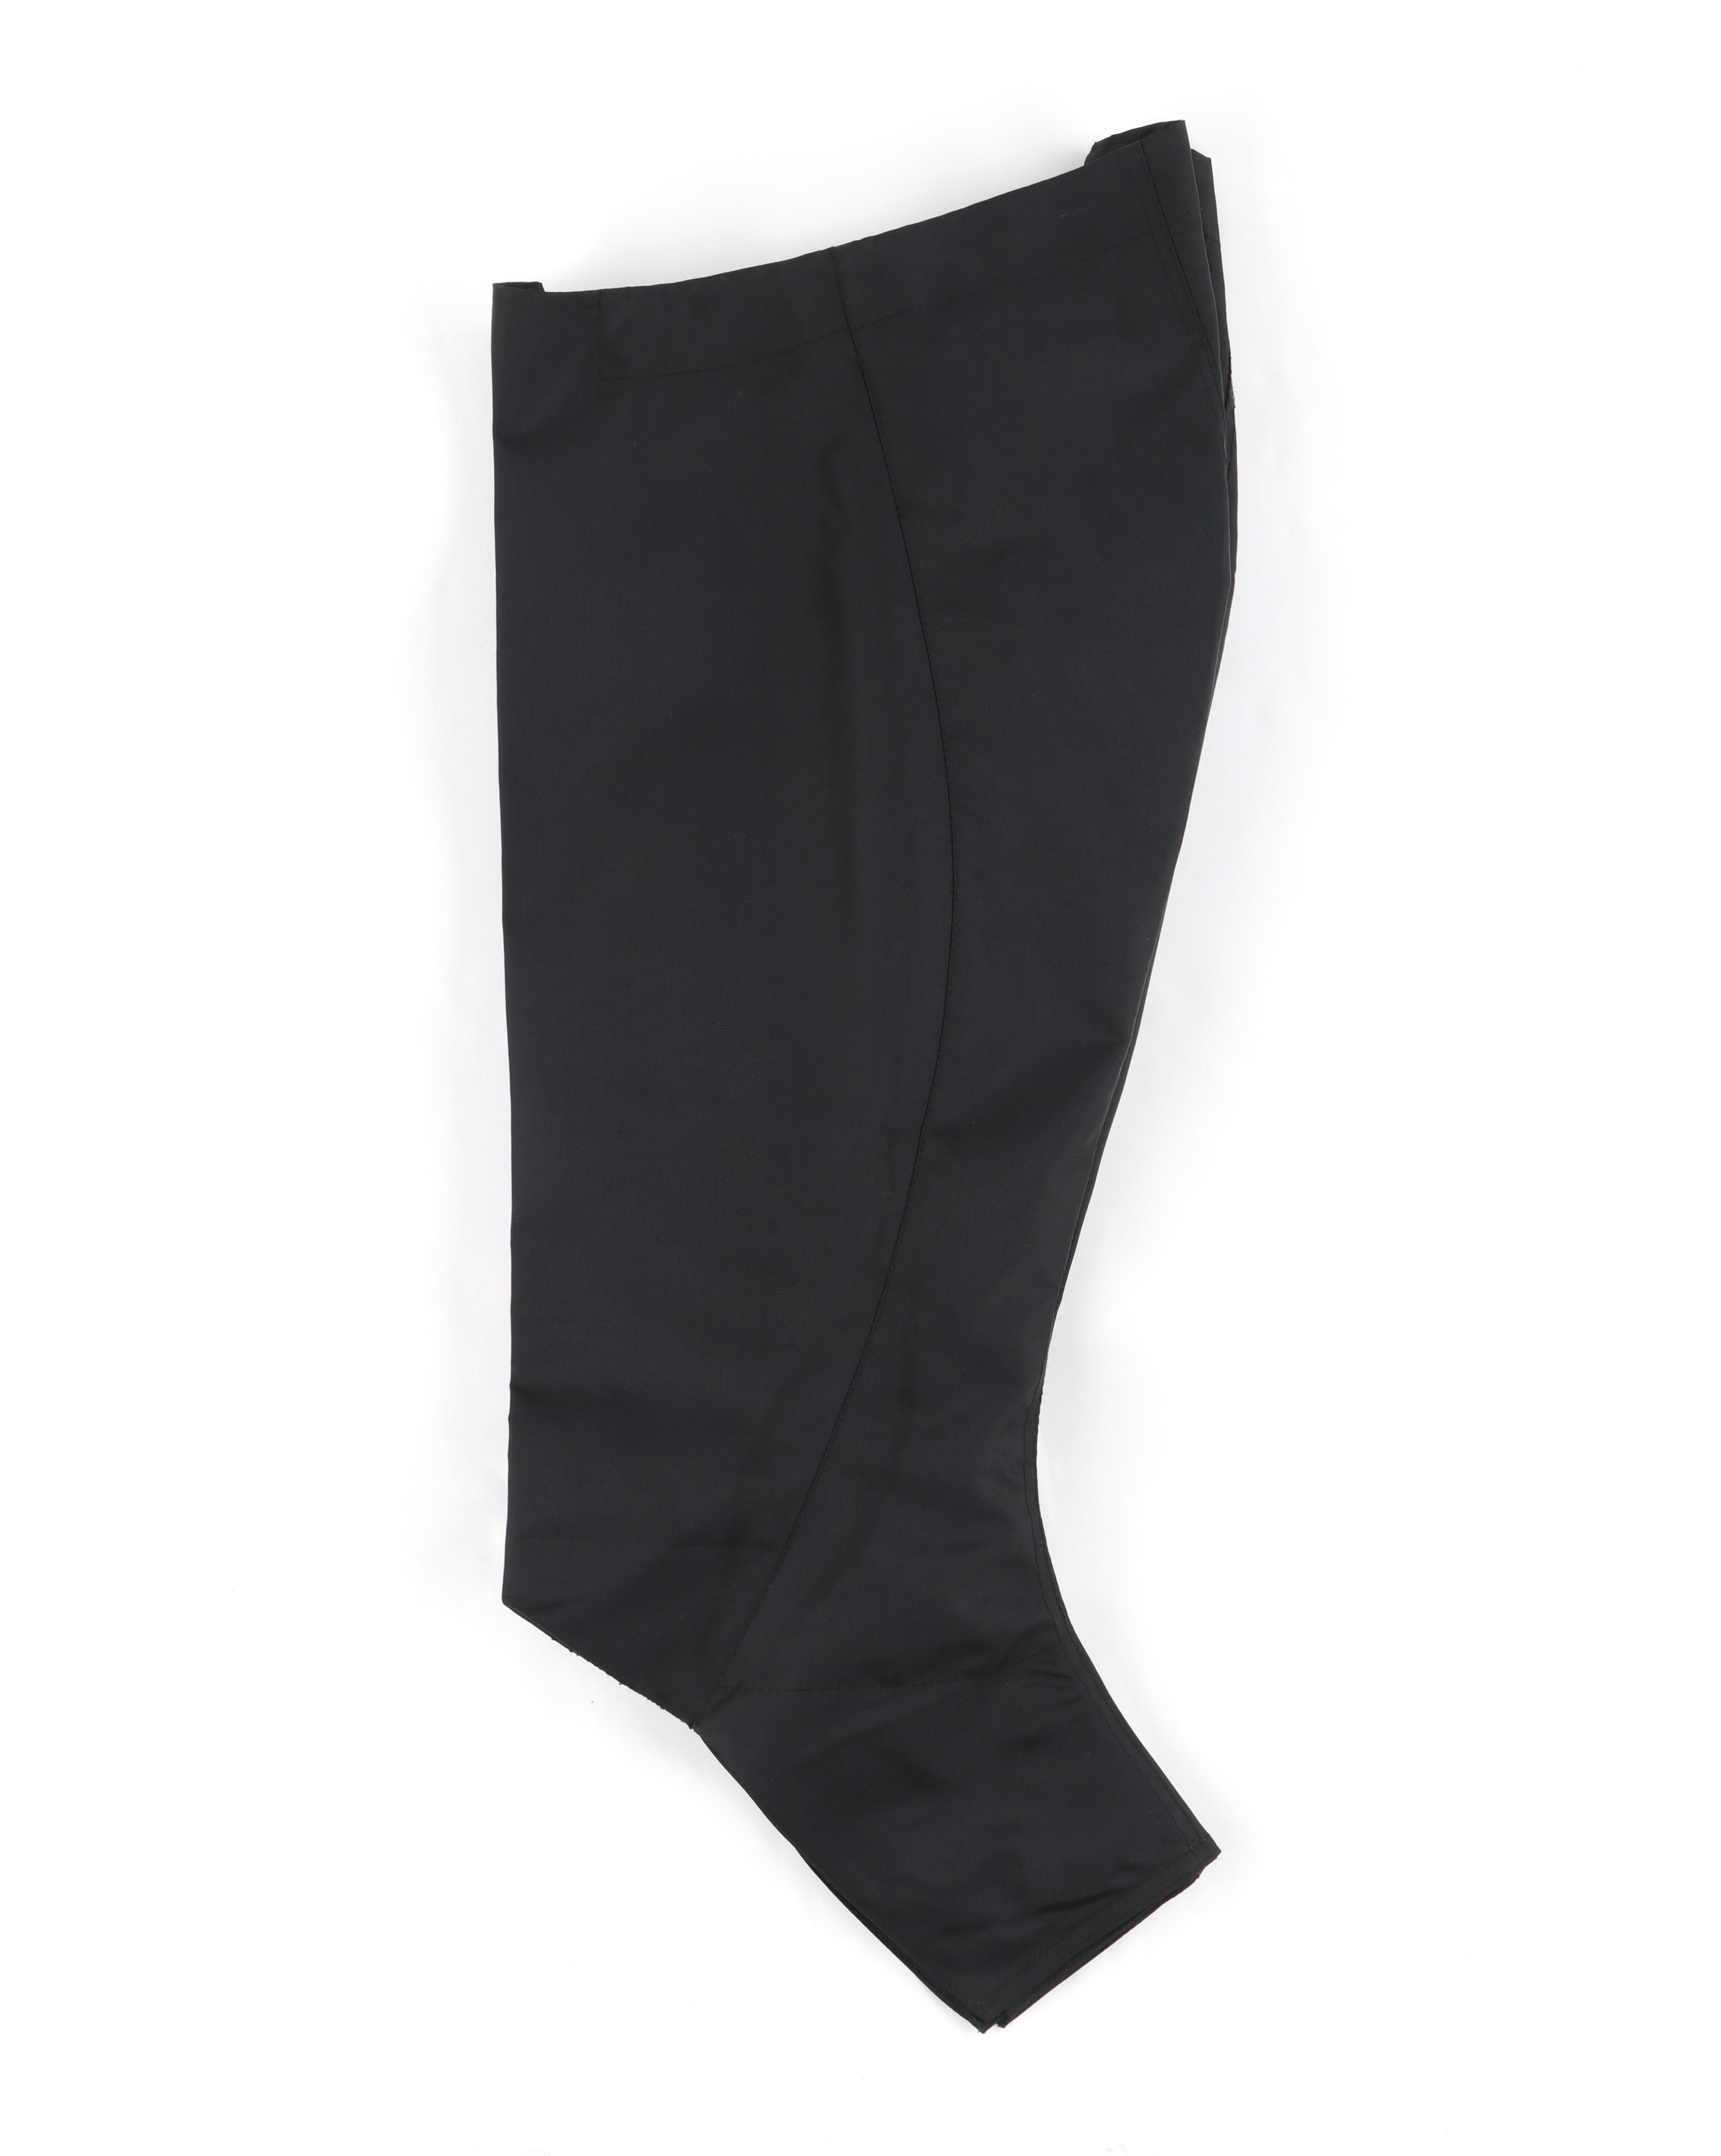 OWEN GASTER c.1996 “Grasshopper” Black Cropped Structured Knicker Trouser Pants For Sale 1